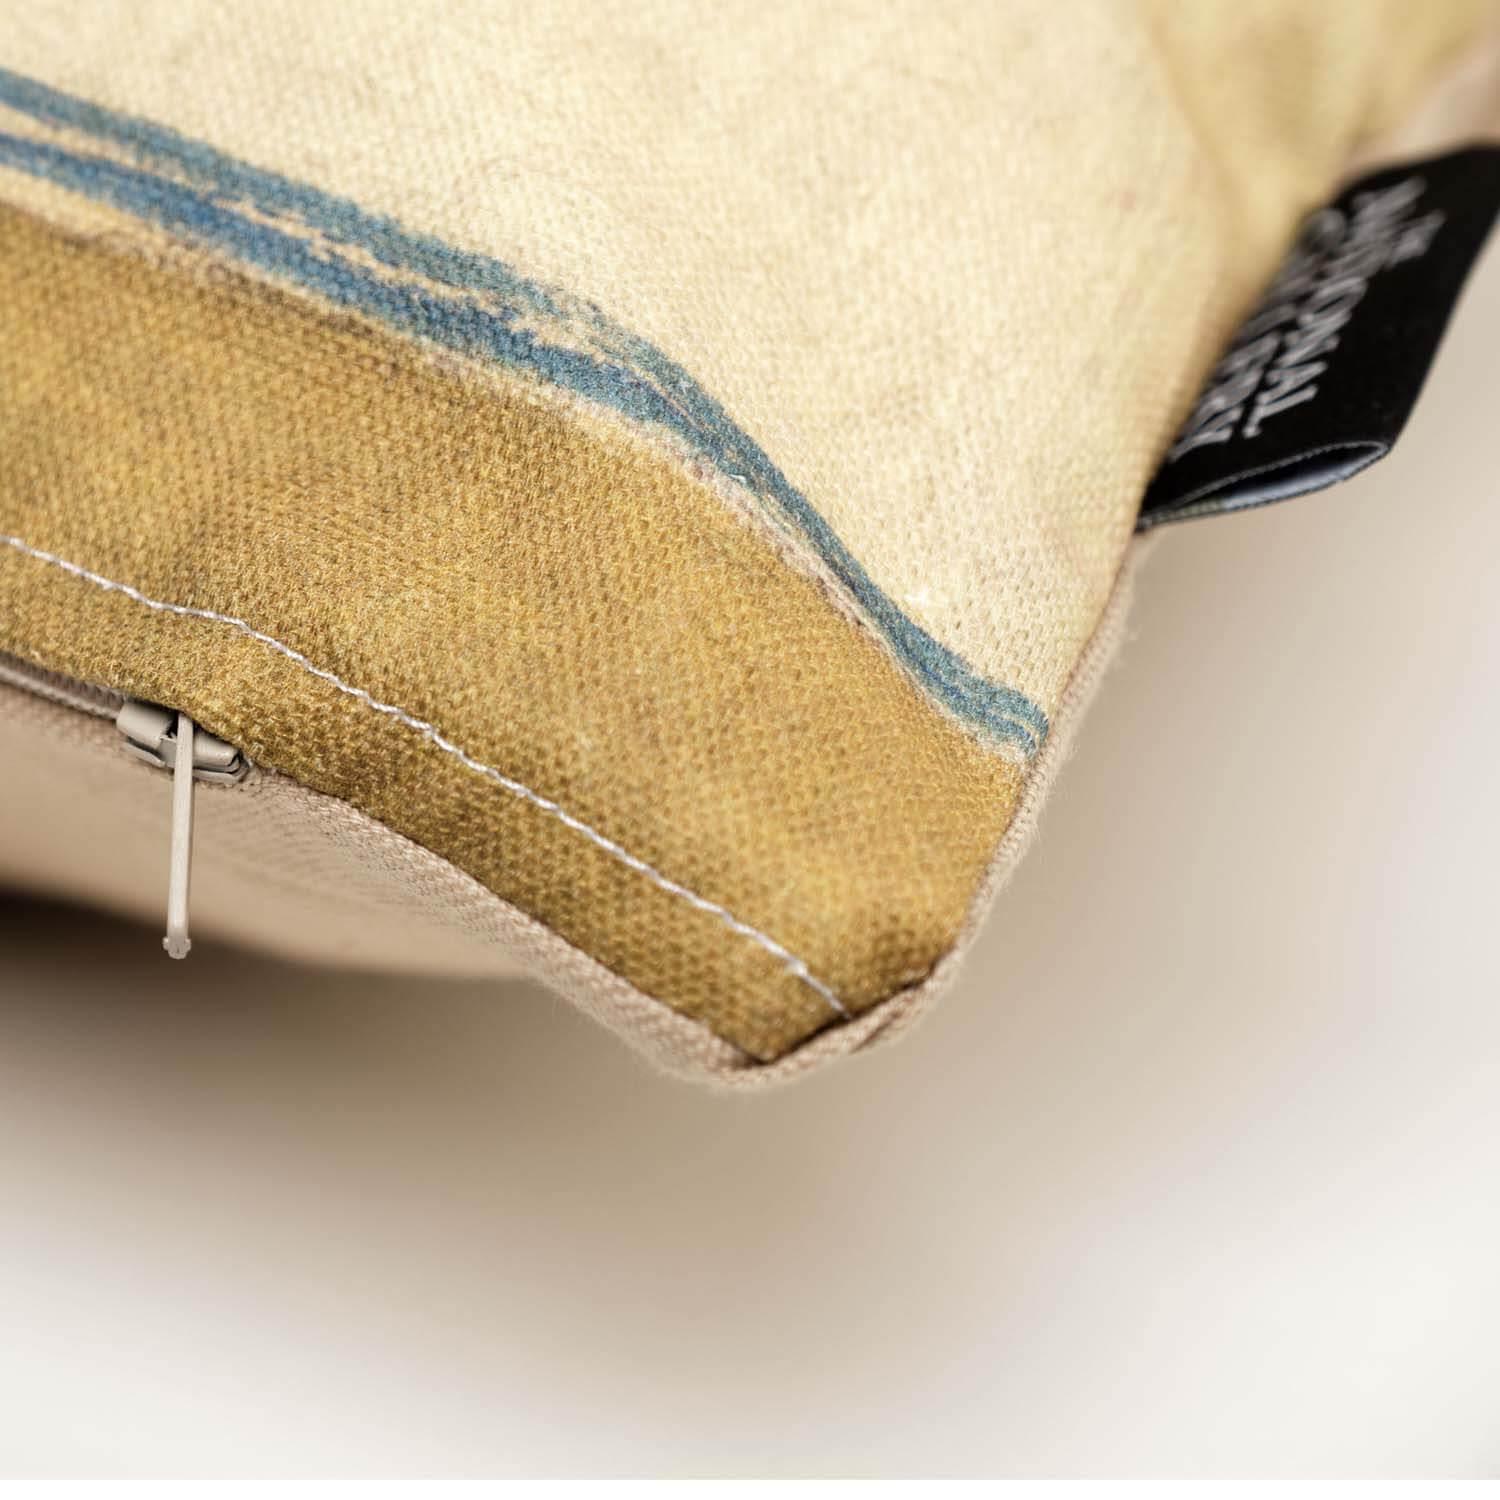 Whistlejacket - George Stubbs - National Gallery Cushion - Handmade Cushions UK - WeLoveCushions